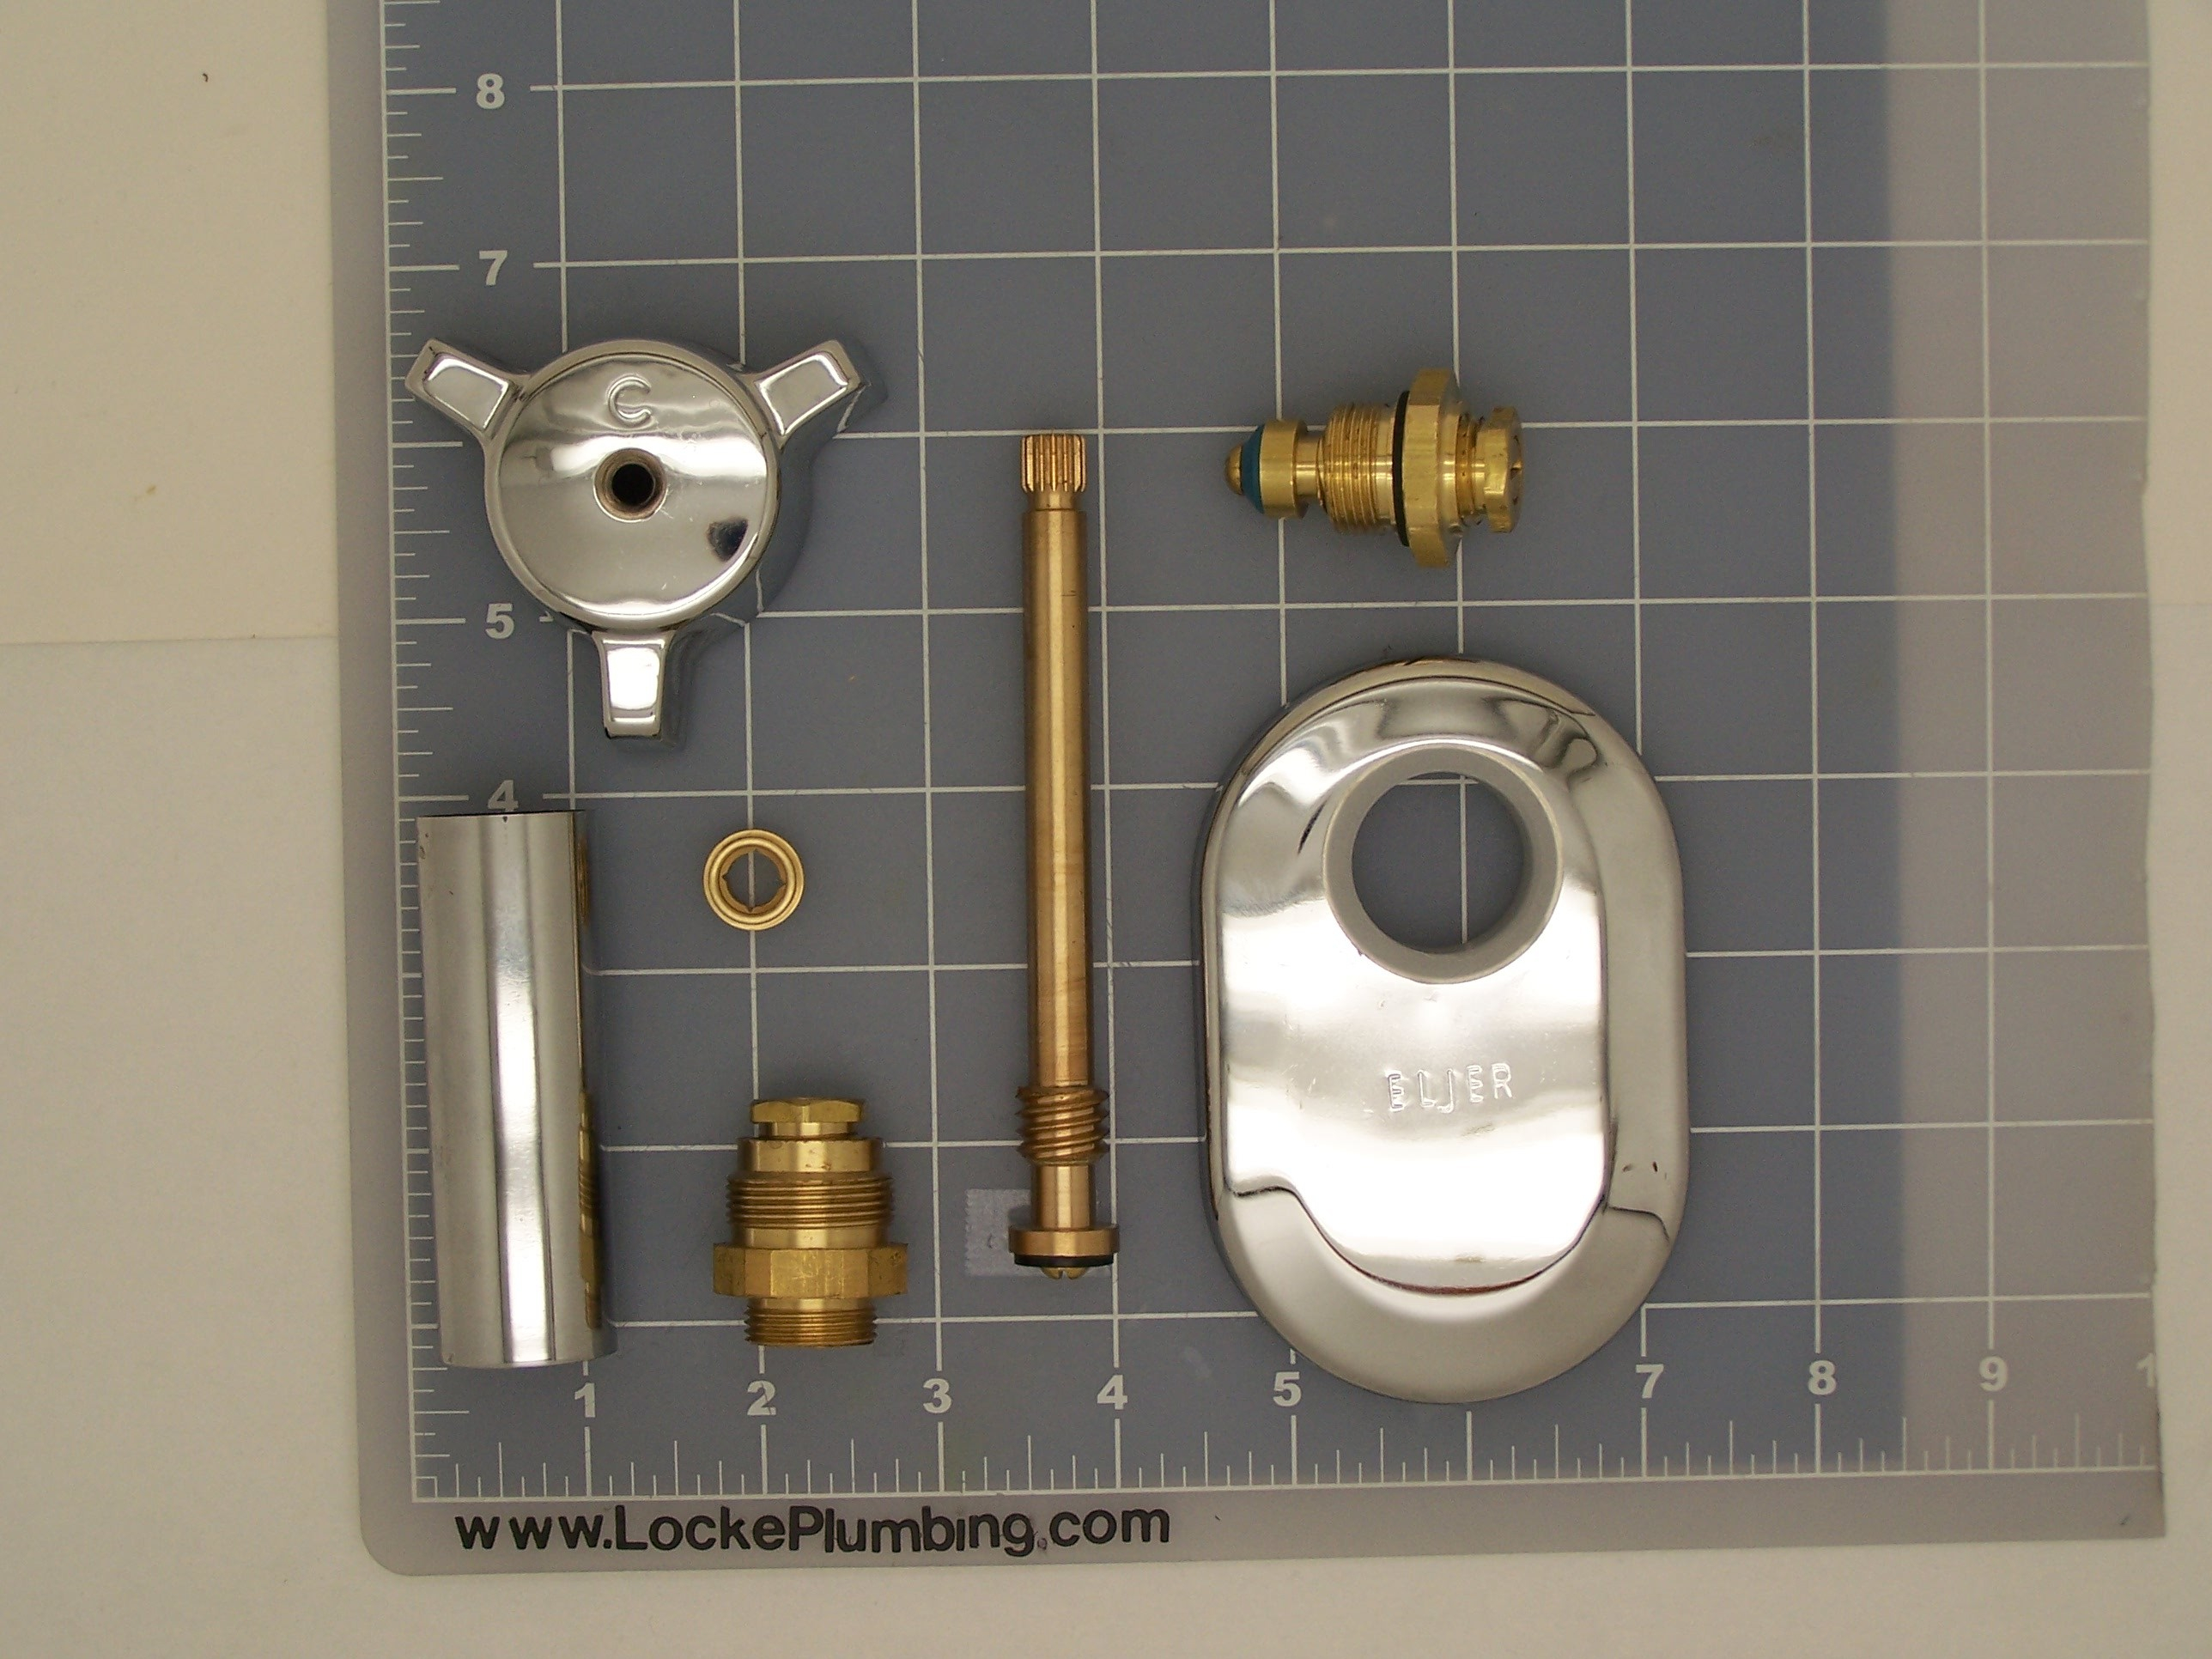 Luxury Eljer Bathroom Faucet Indusperformance intended for size 2576 X 1932